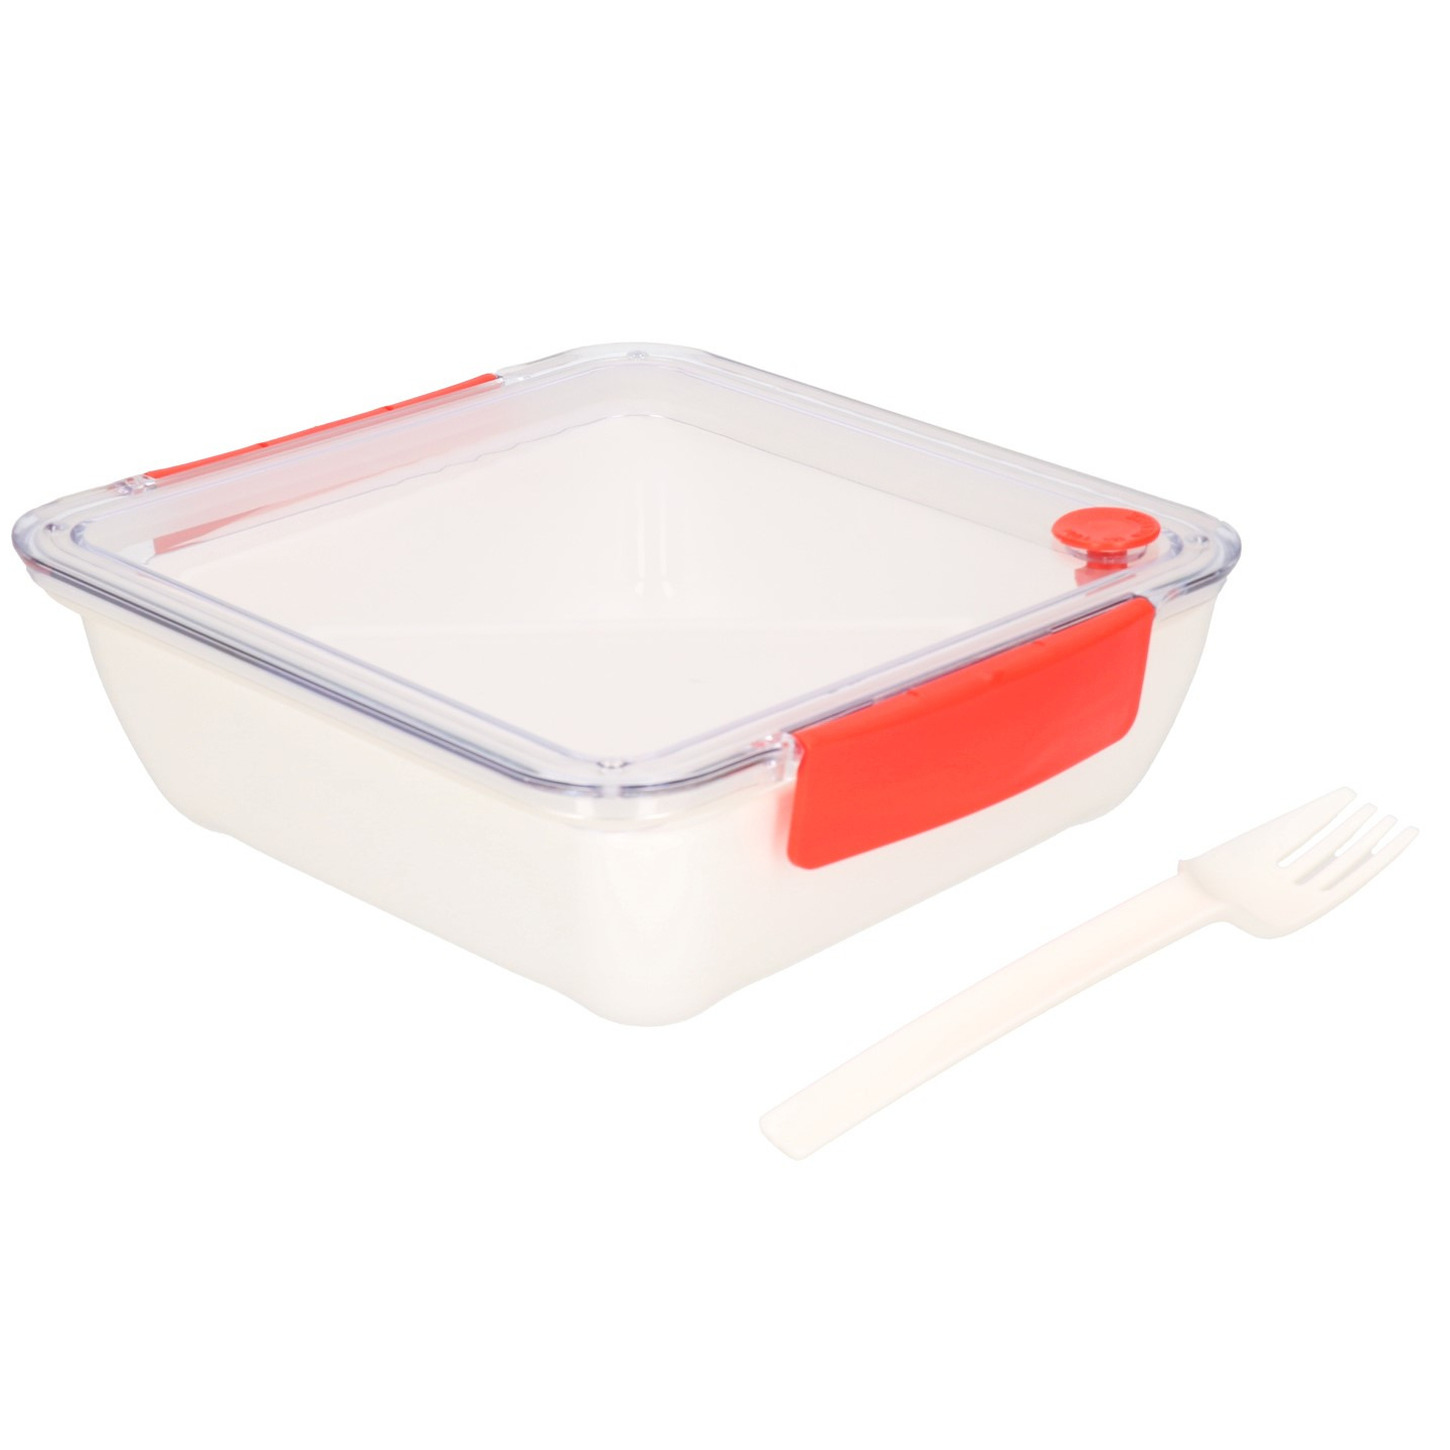 Transparant met rode lunchbox met vorkje 1000 ml